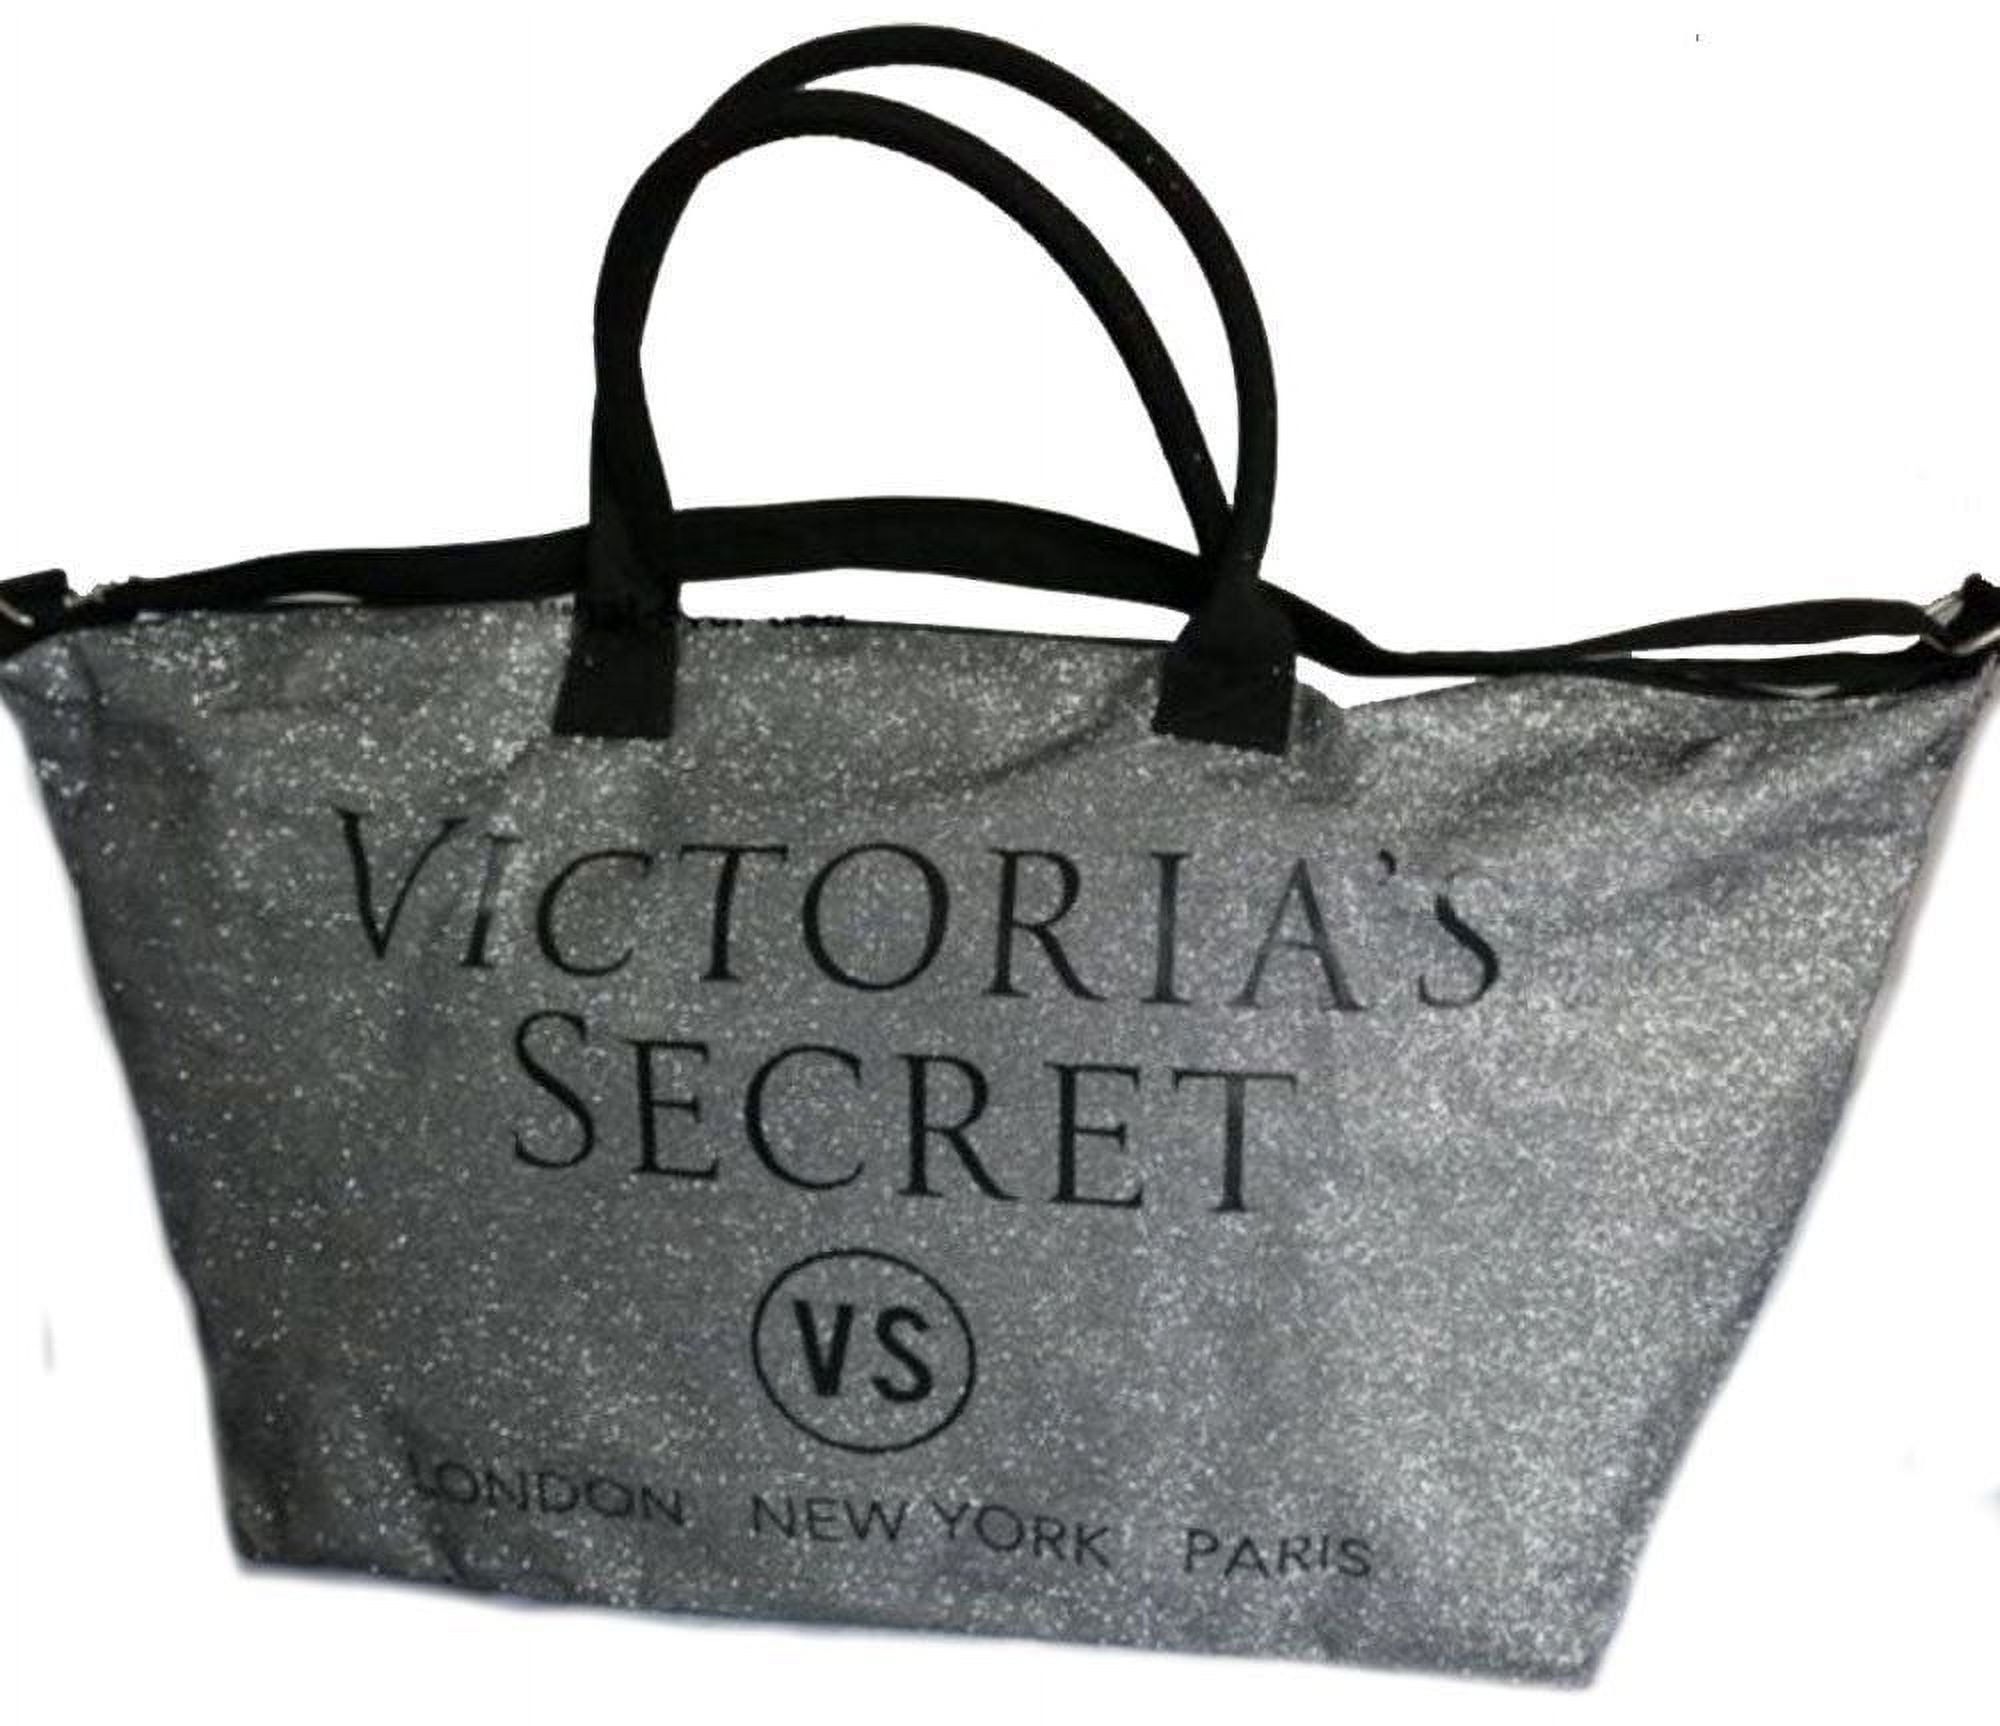 Victoria's Secret VS London New York Paris Silver Glitter and Black Large  Tote with zipper